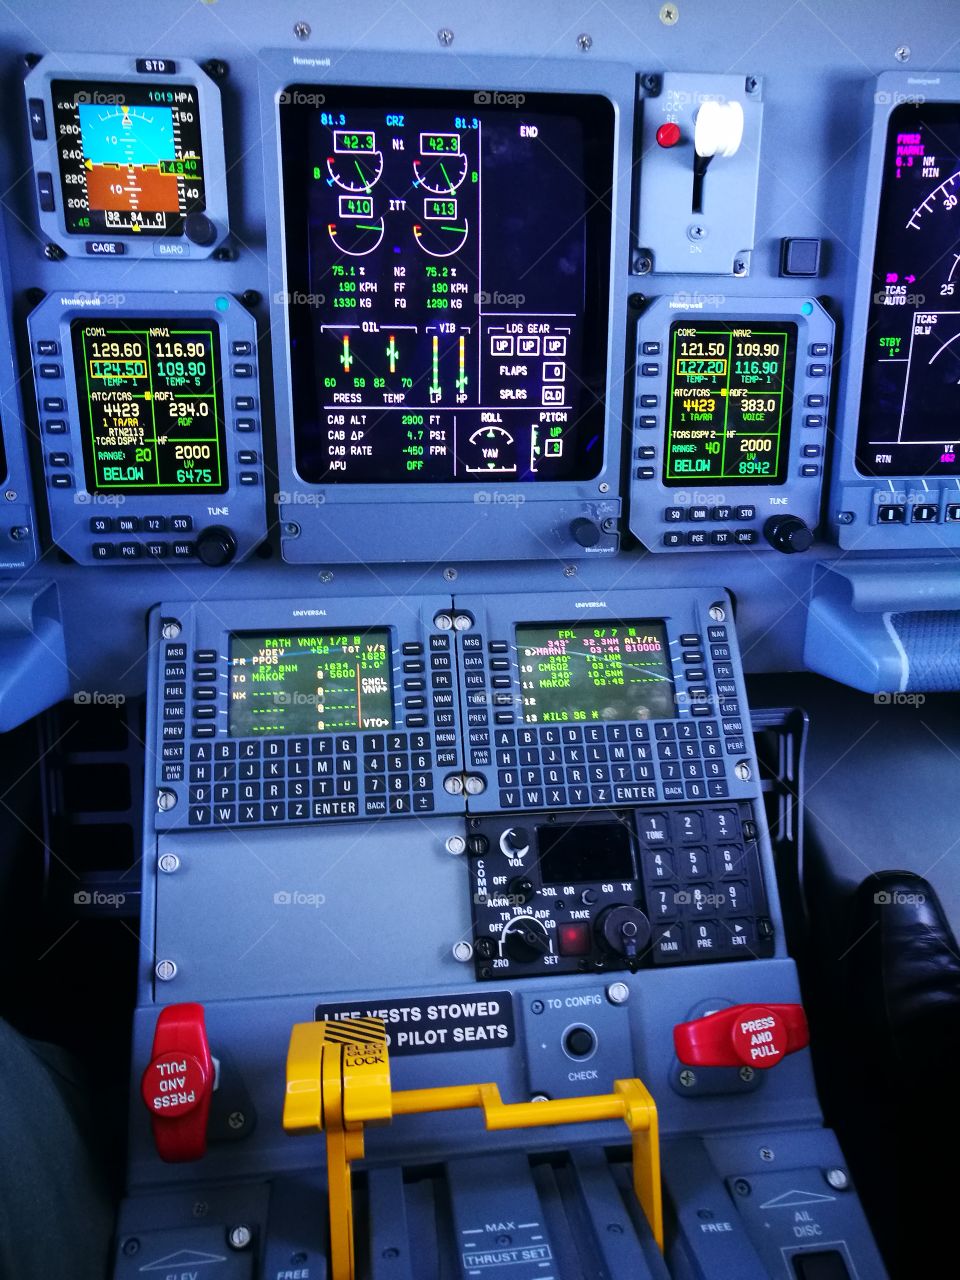 My cockpit